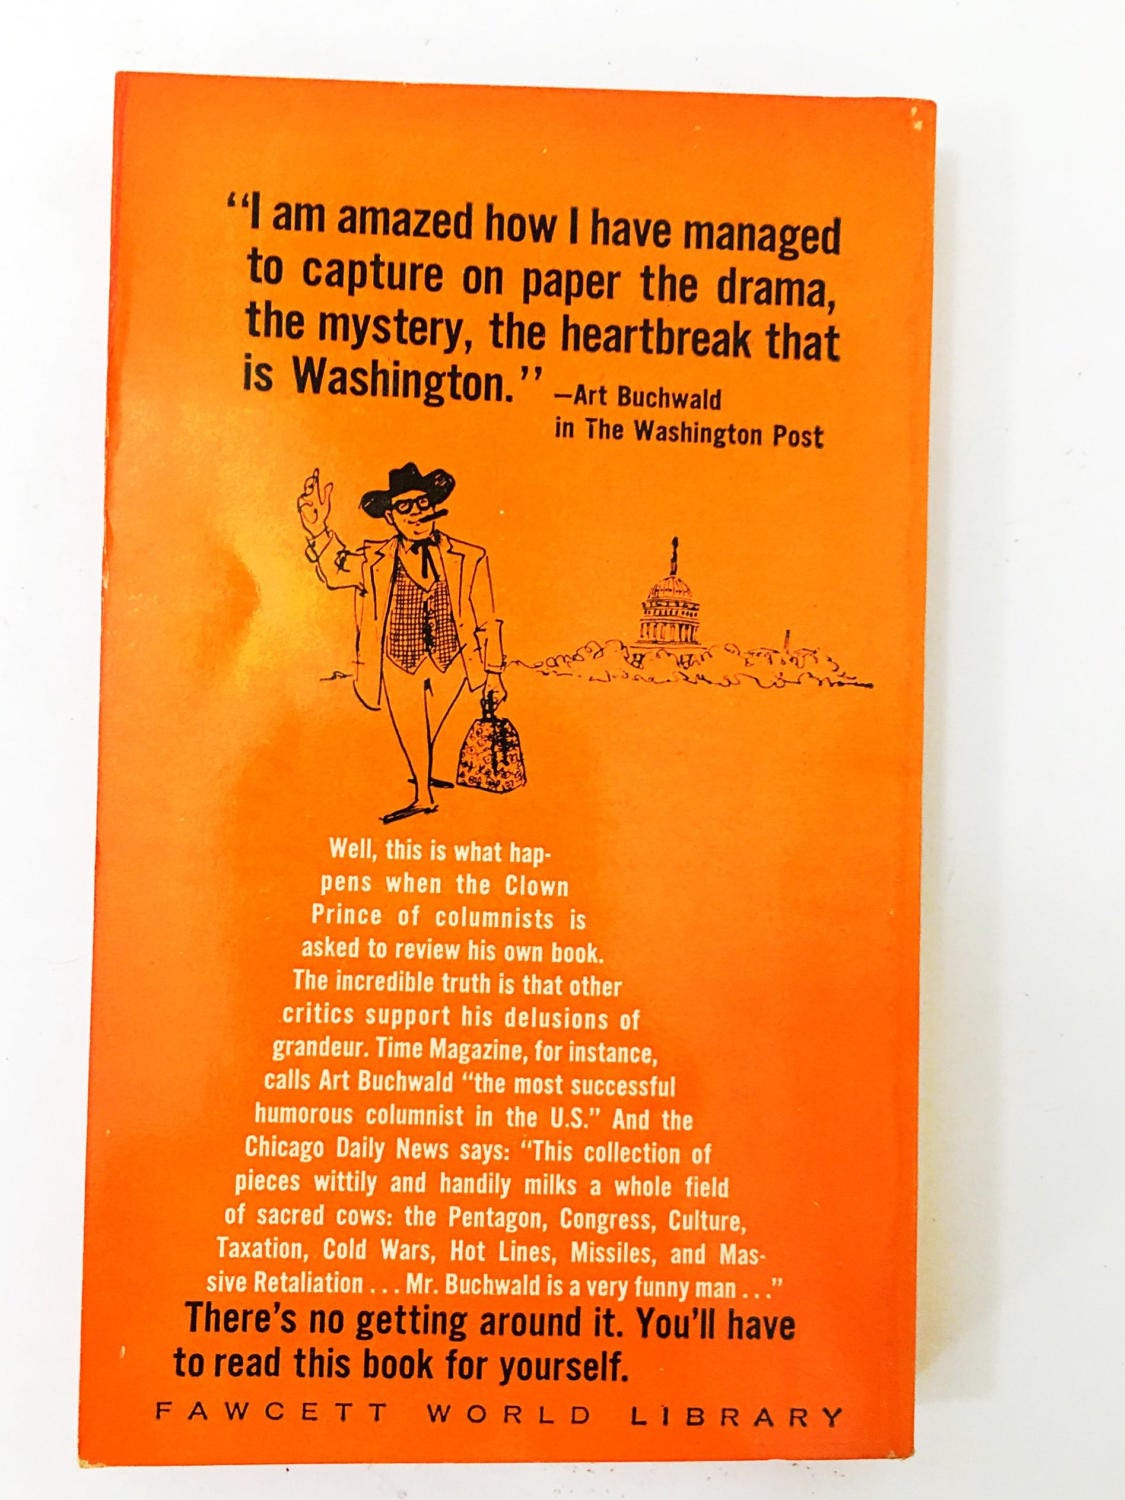 1963 Art Buchwald I Chose Capitol Punishment. Vintage paperback book American humorist. Satirical paperback book. Circa 1963.